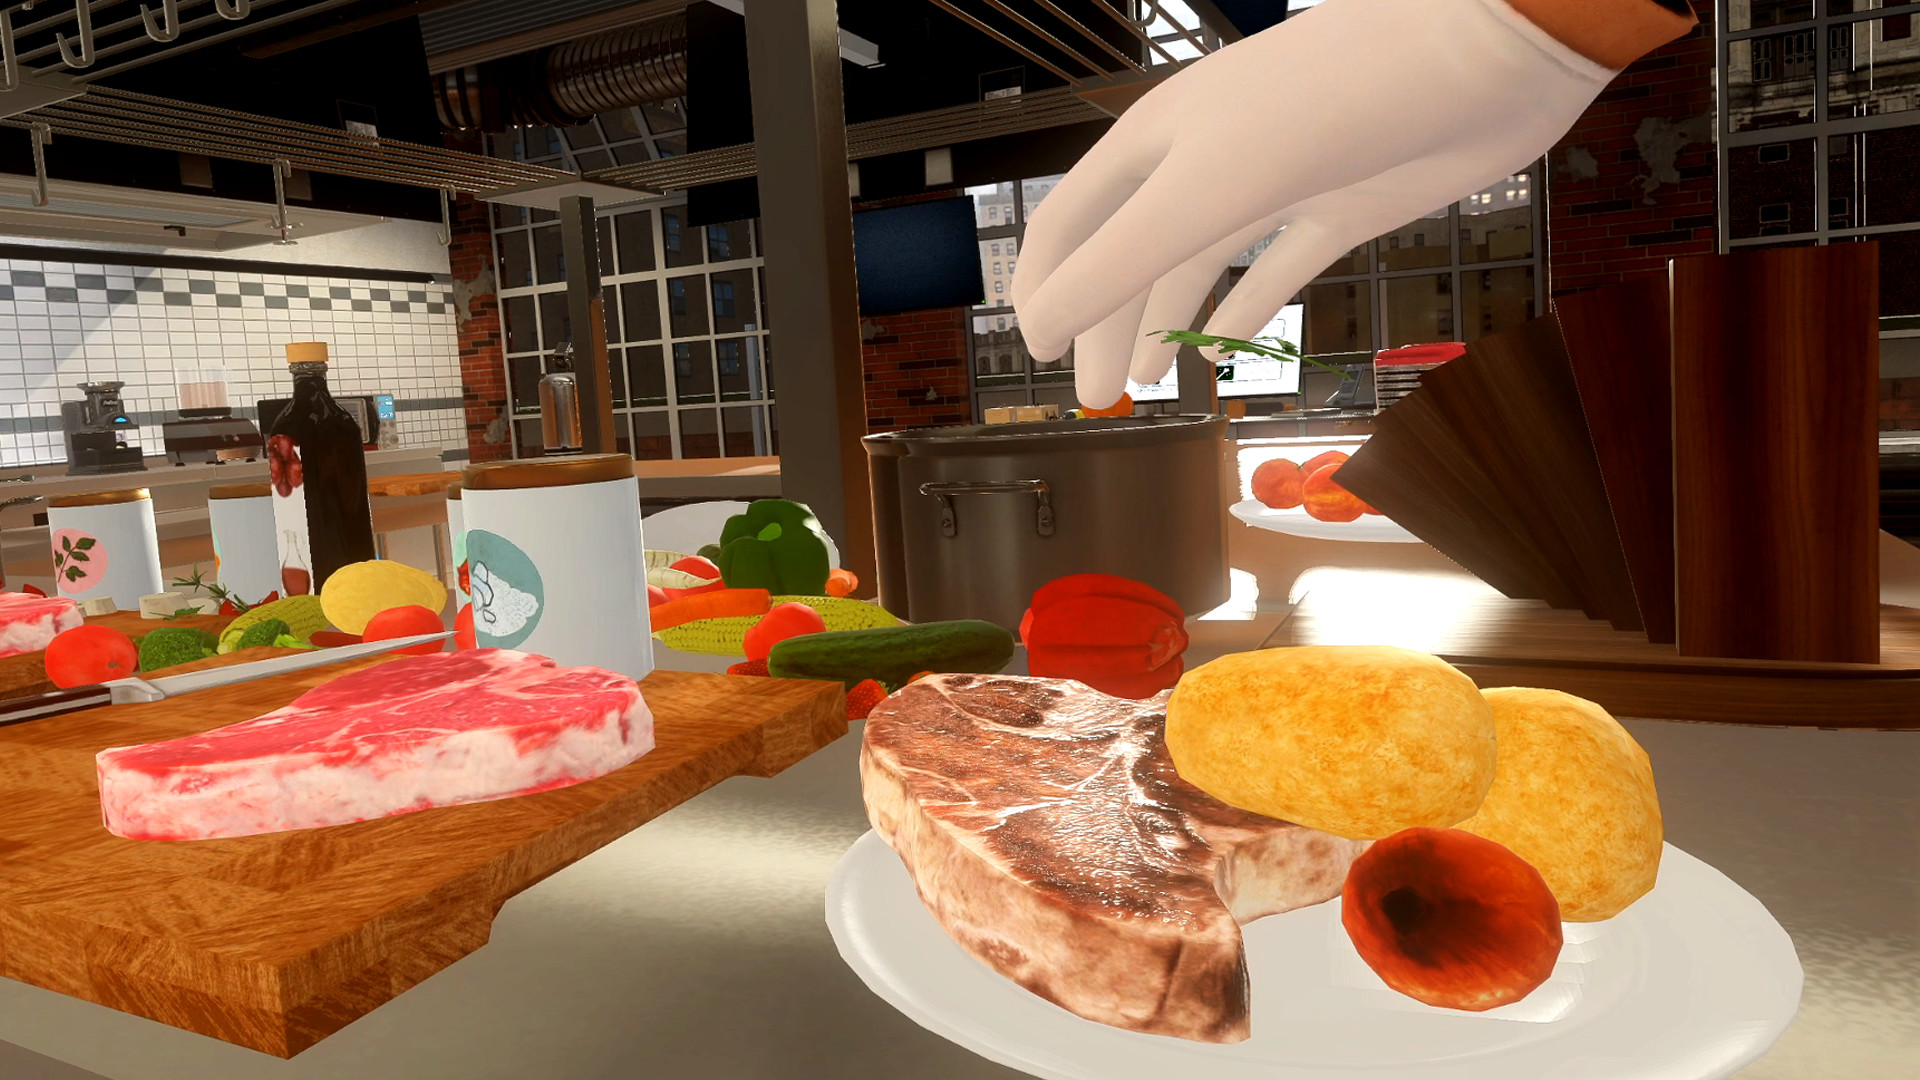 Cooking Simulator VR Steam Altergift